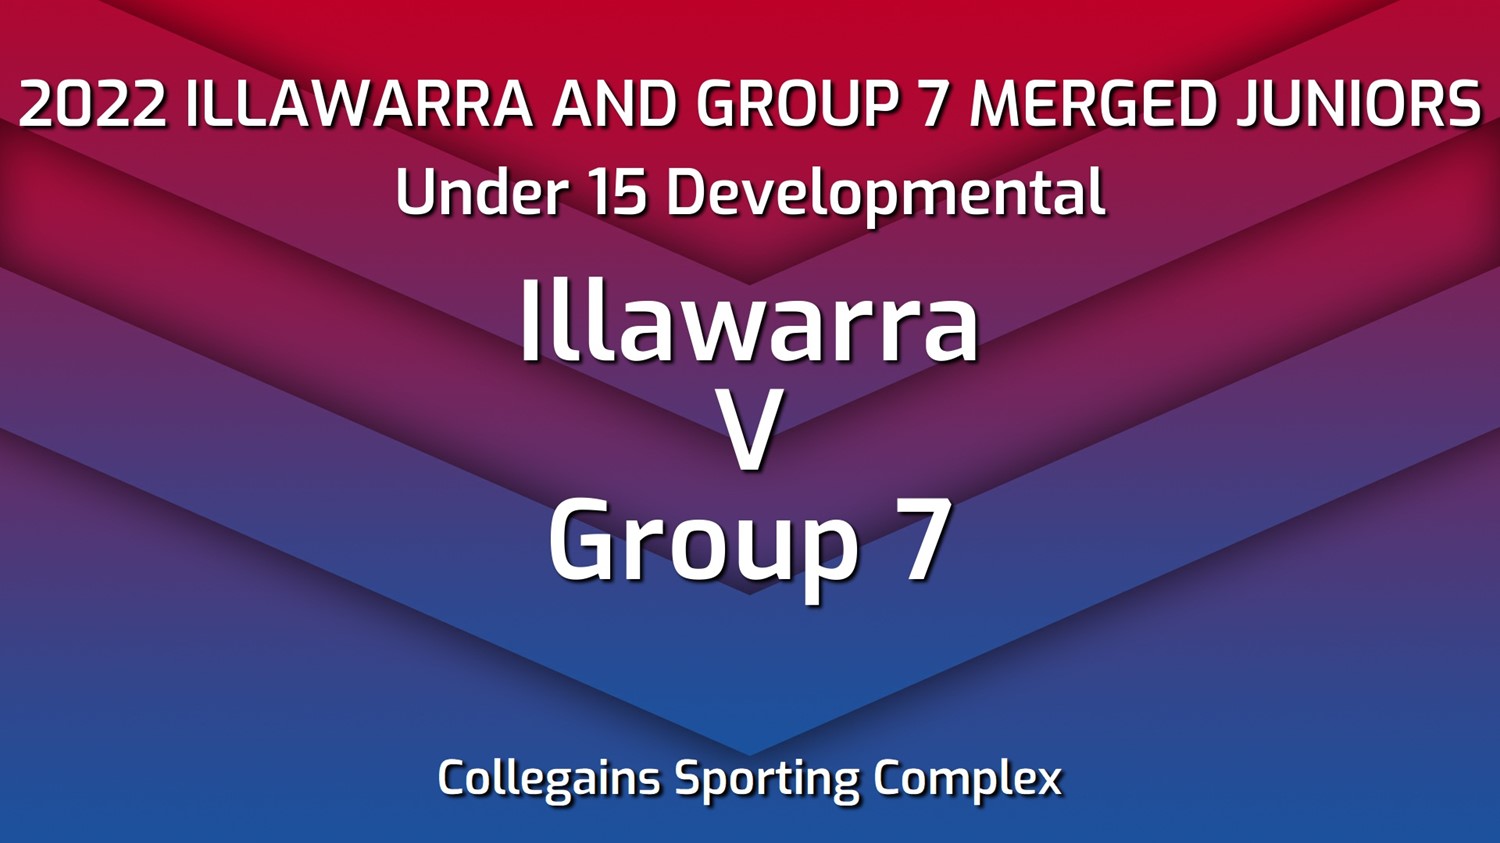 220917-Illawarra and Group 7 Merged Juniors Under 15 Developmental - Illawarra v Group 7 Minigame Slate Image